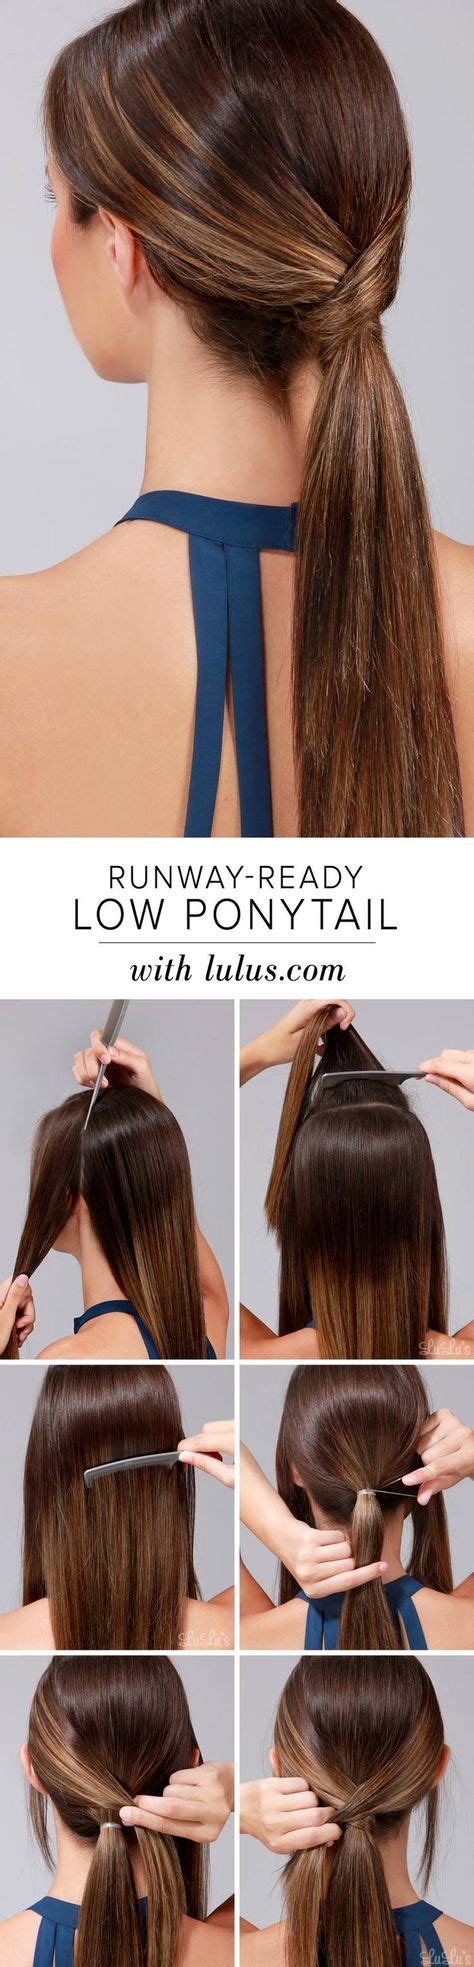 25 Lovely Ponytail Hair Ideas Hair Lengths Hair Styles Easy Hairstyles